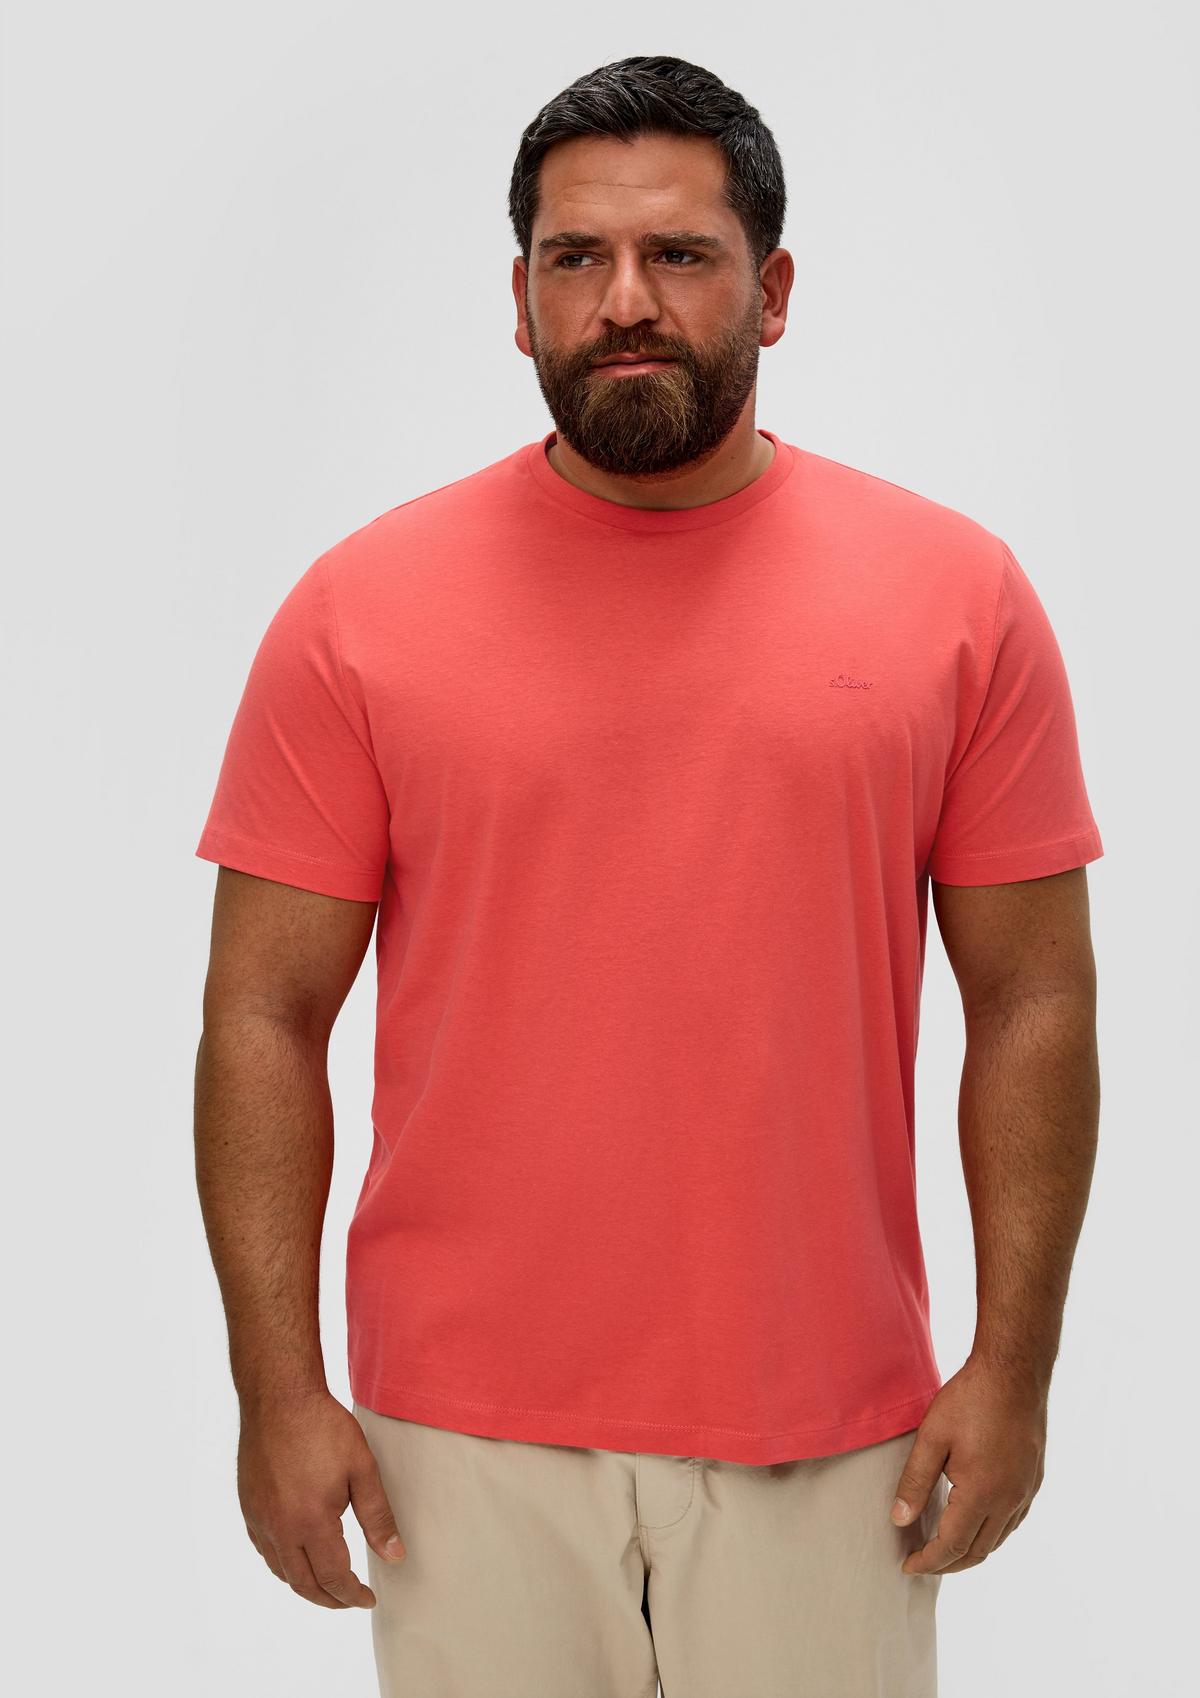 for Plain Men T-Shirts